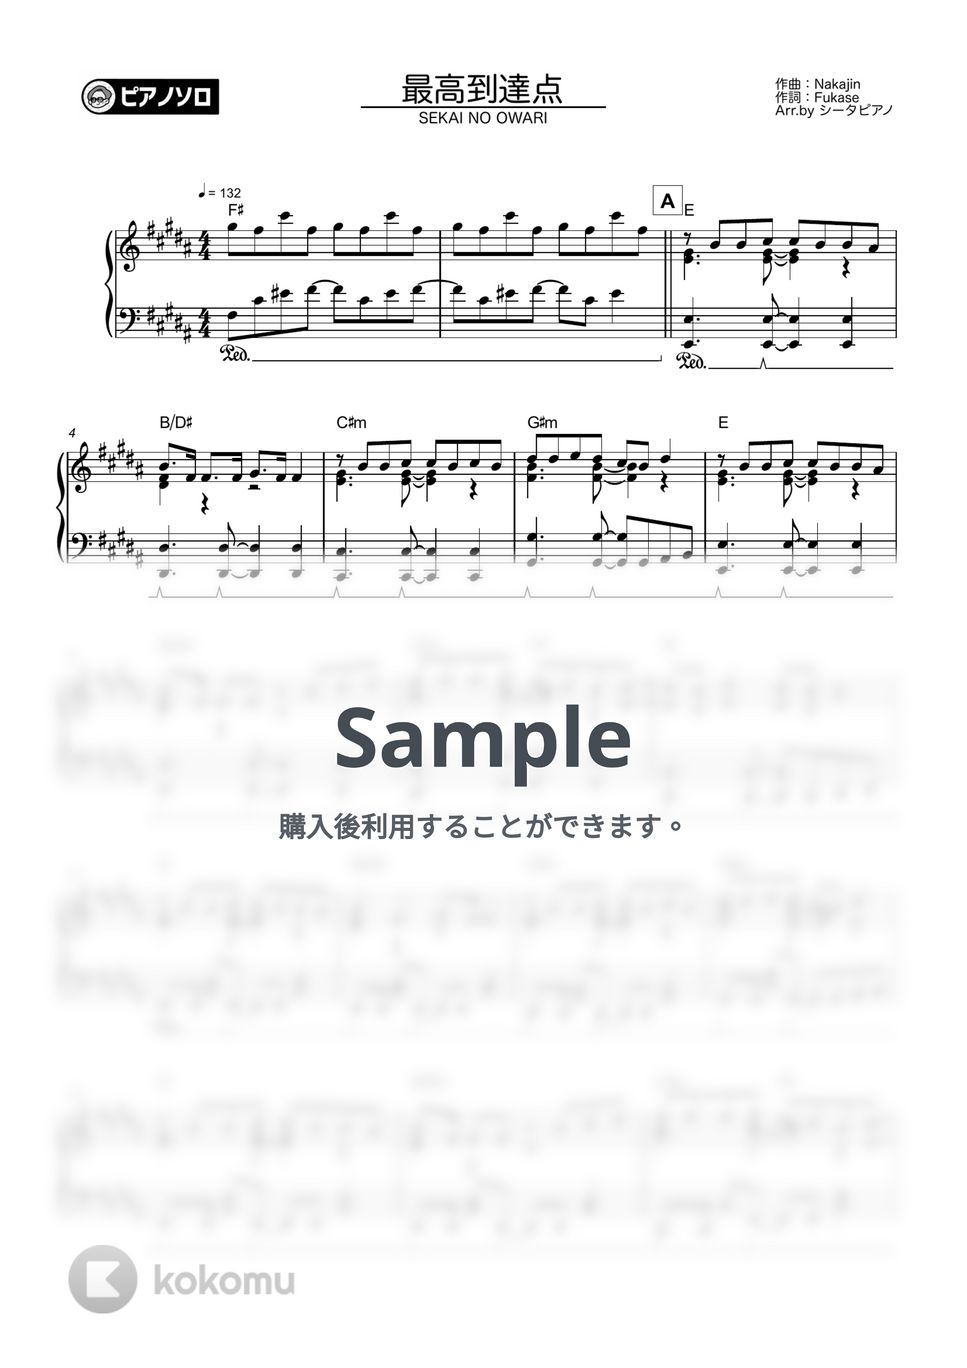 SEKAI NO OWARI - 最高到達点 by シータピアノ